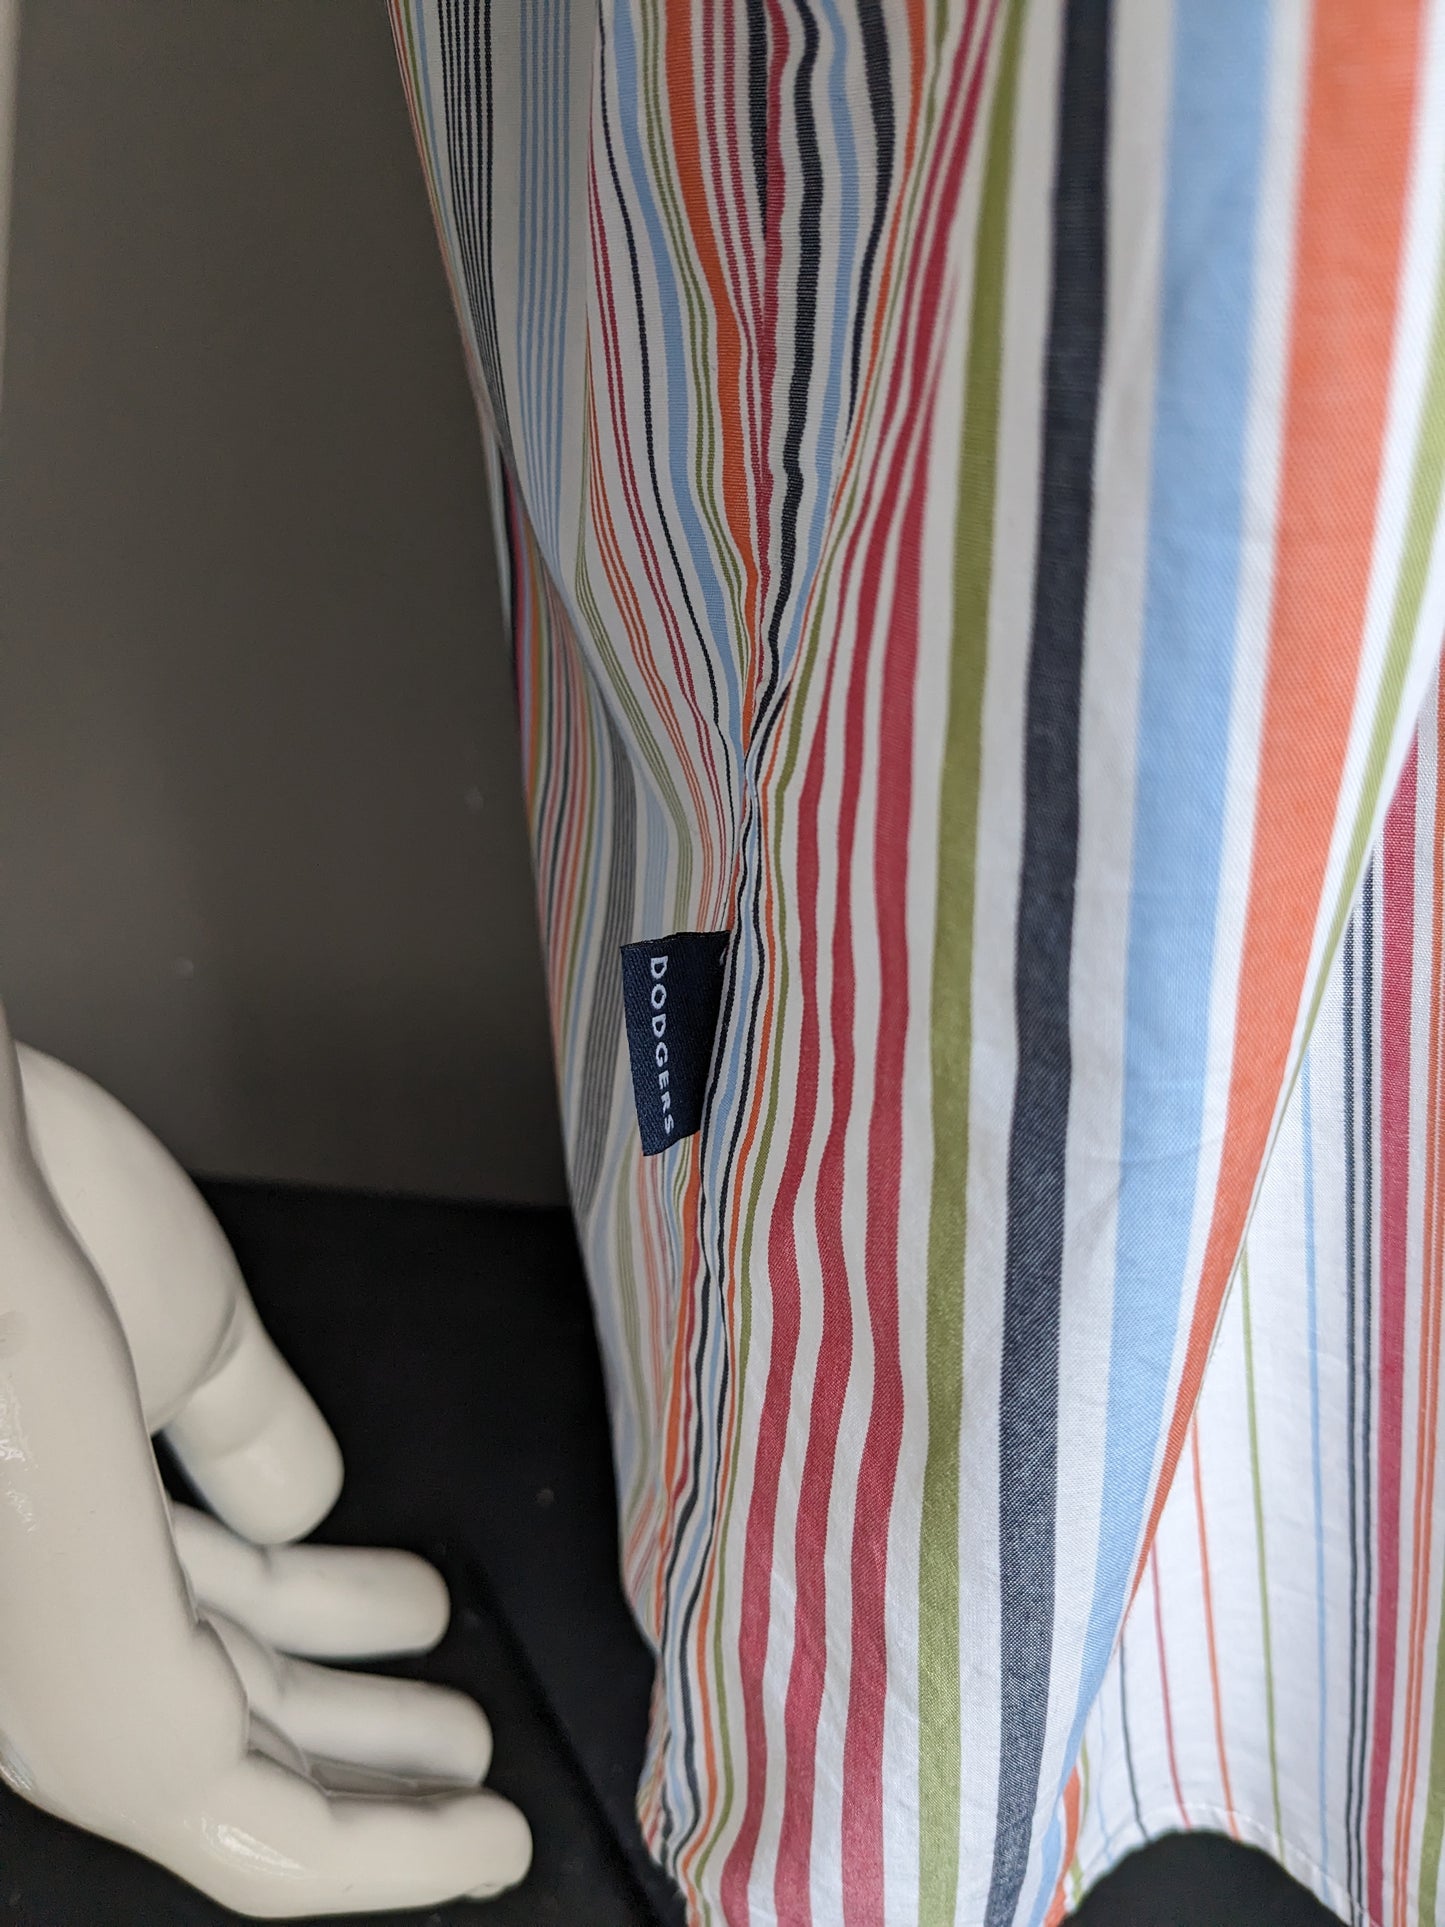 Dodgers shirt short sleeve. Colored striped motif. Size 3XL / XXXL.